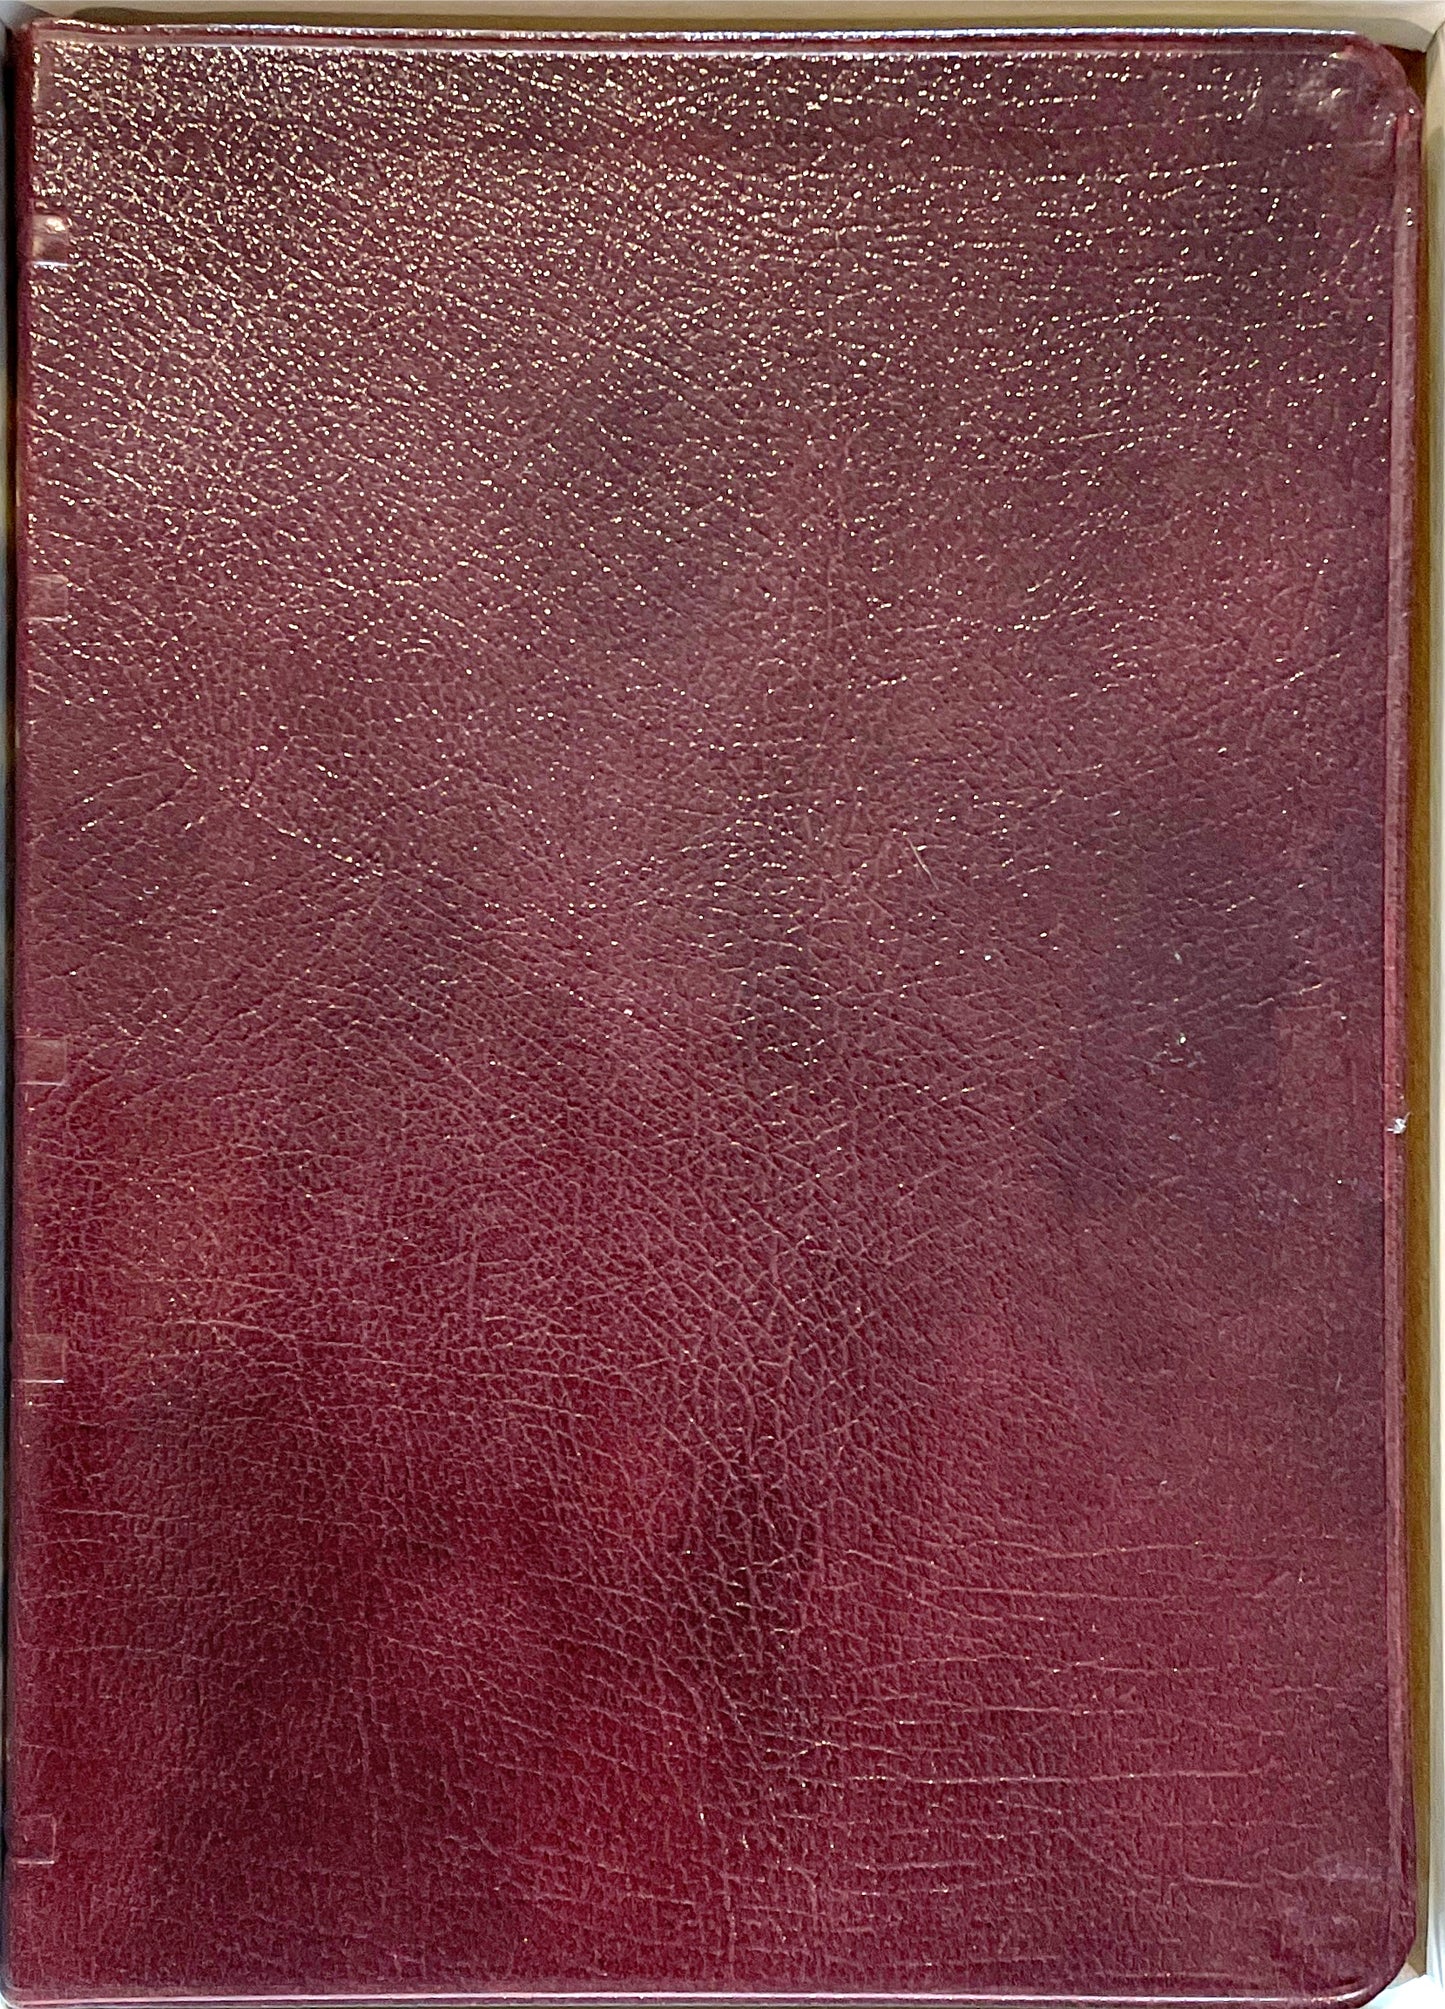 Biblia Antigua Version Cipriano de Valera 1602 - Piel - Caoba